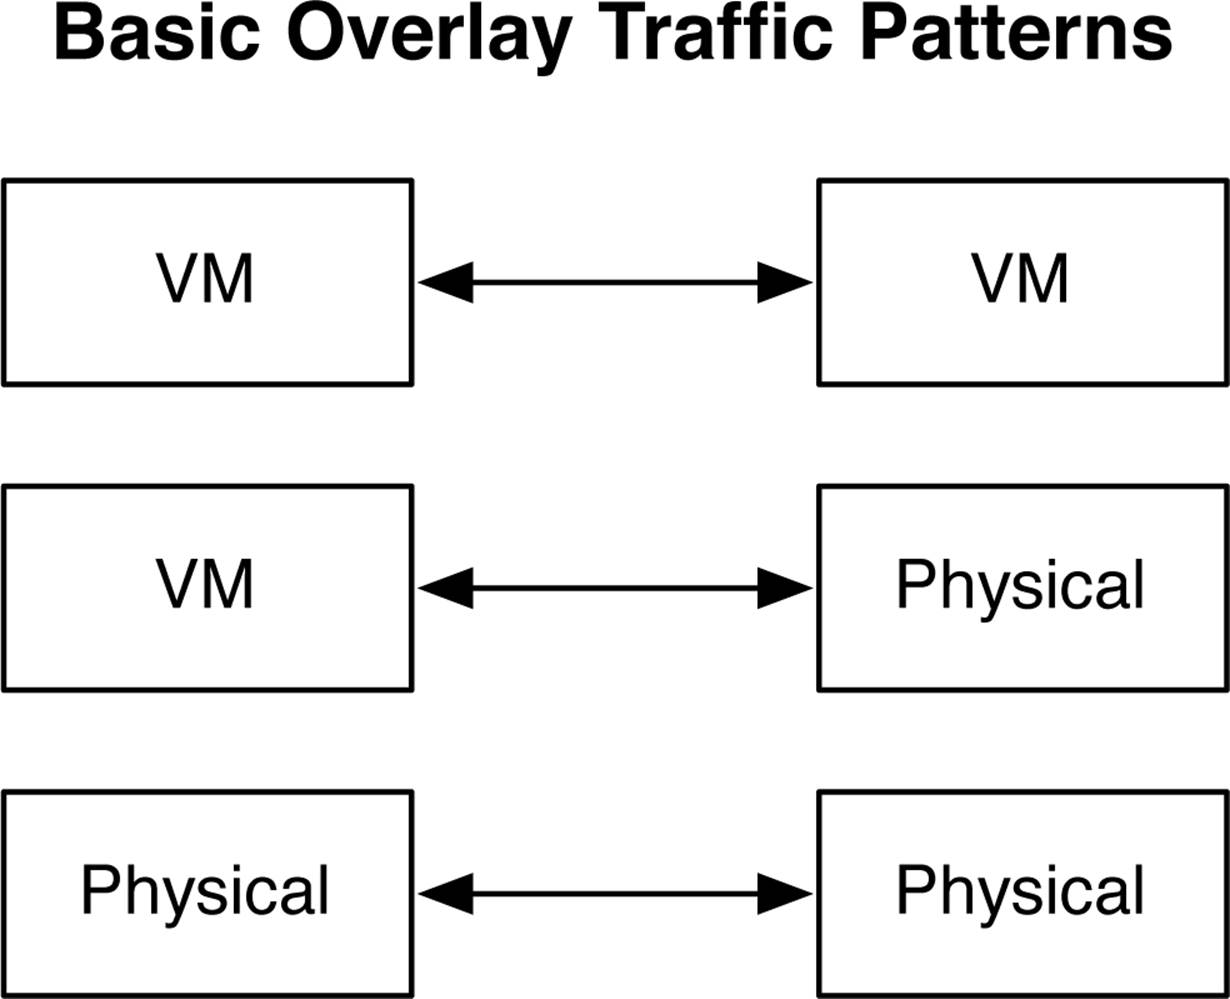 Basic overlay traffic patterns